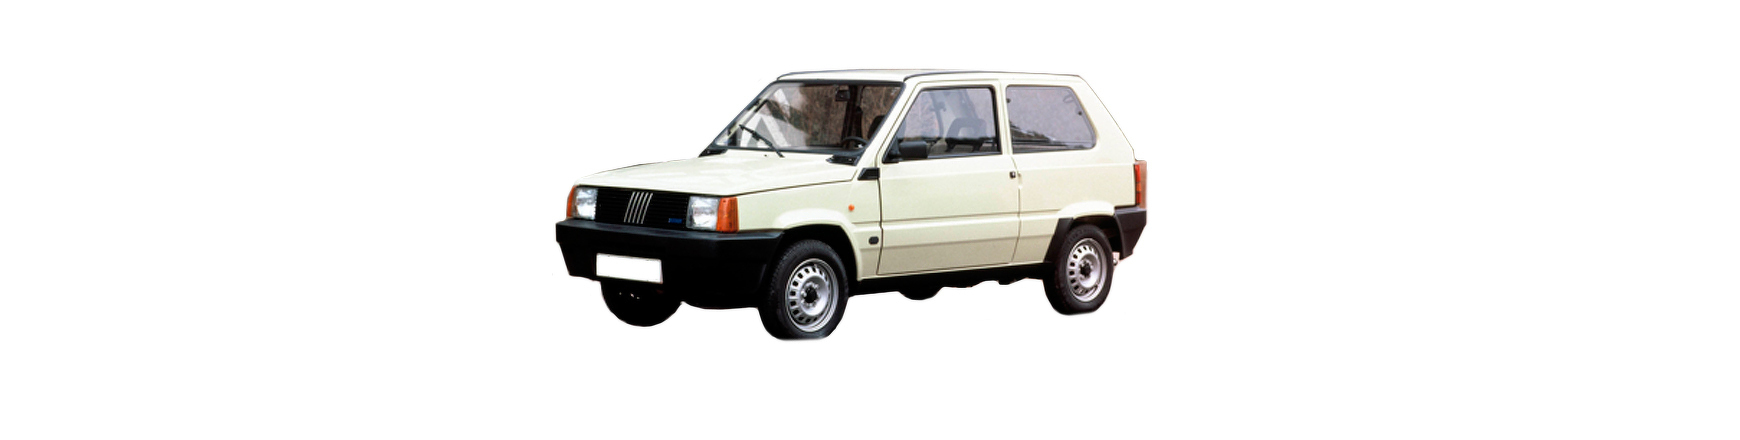 Recambios de Fiat Panda de 1986 1987 1988 1989 1990 91 92 93 94 95 96